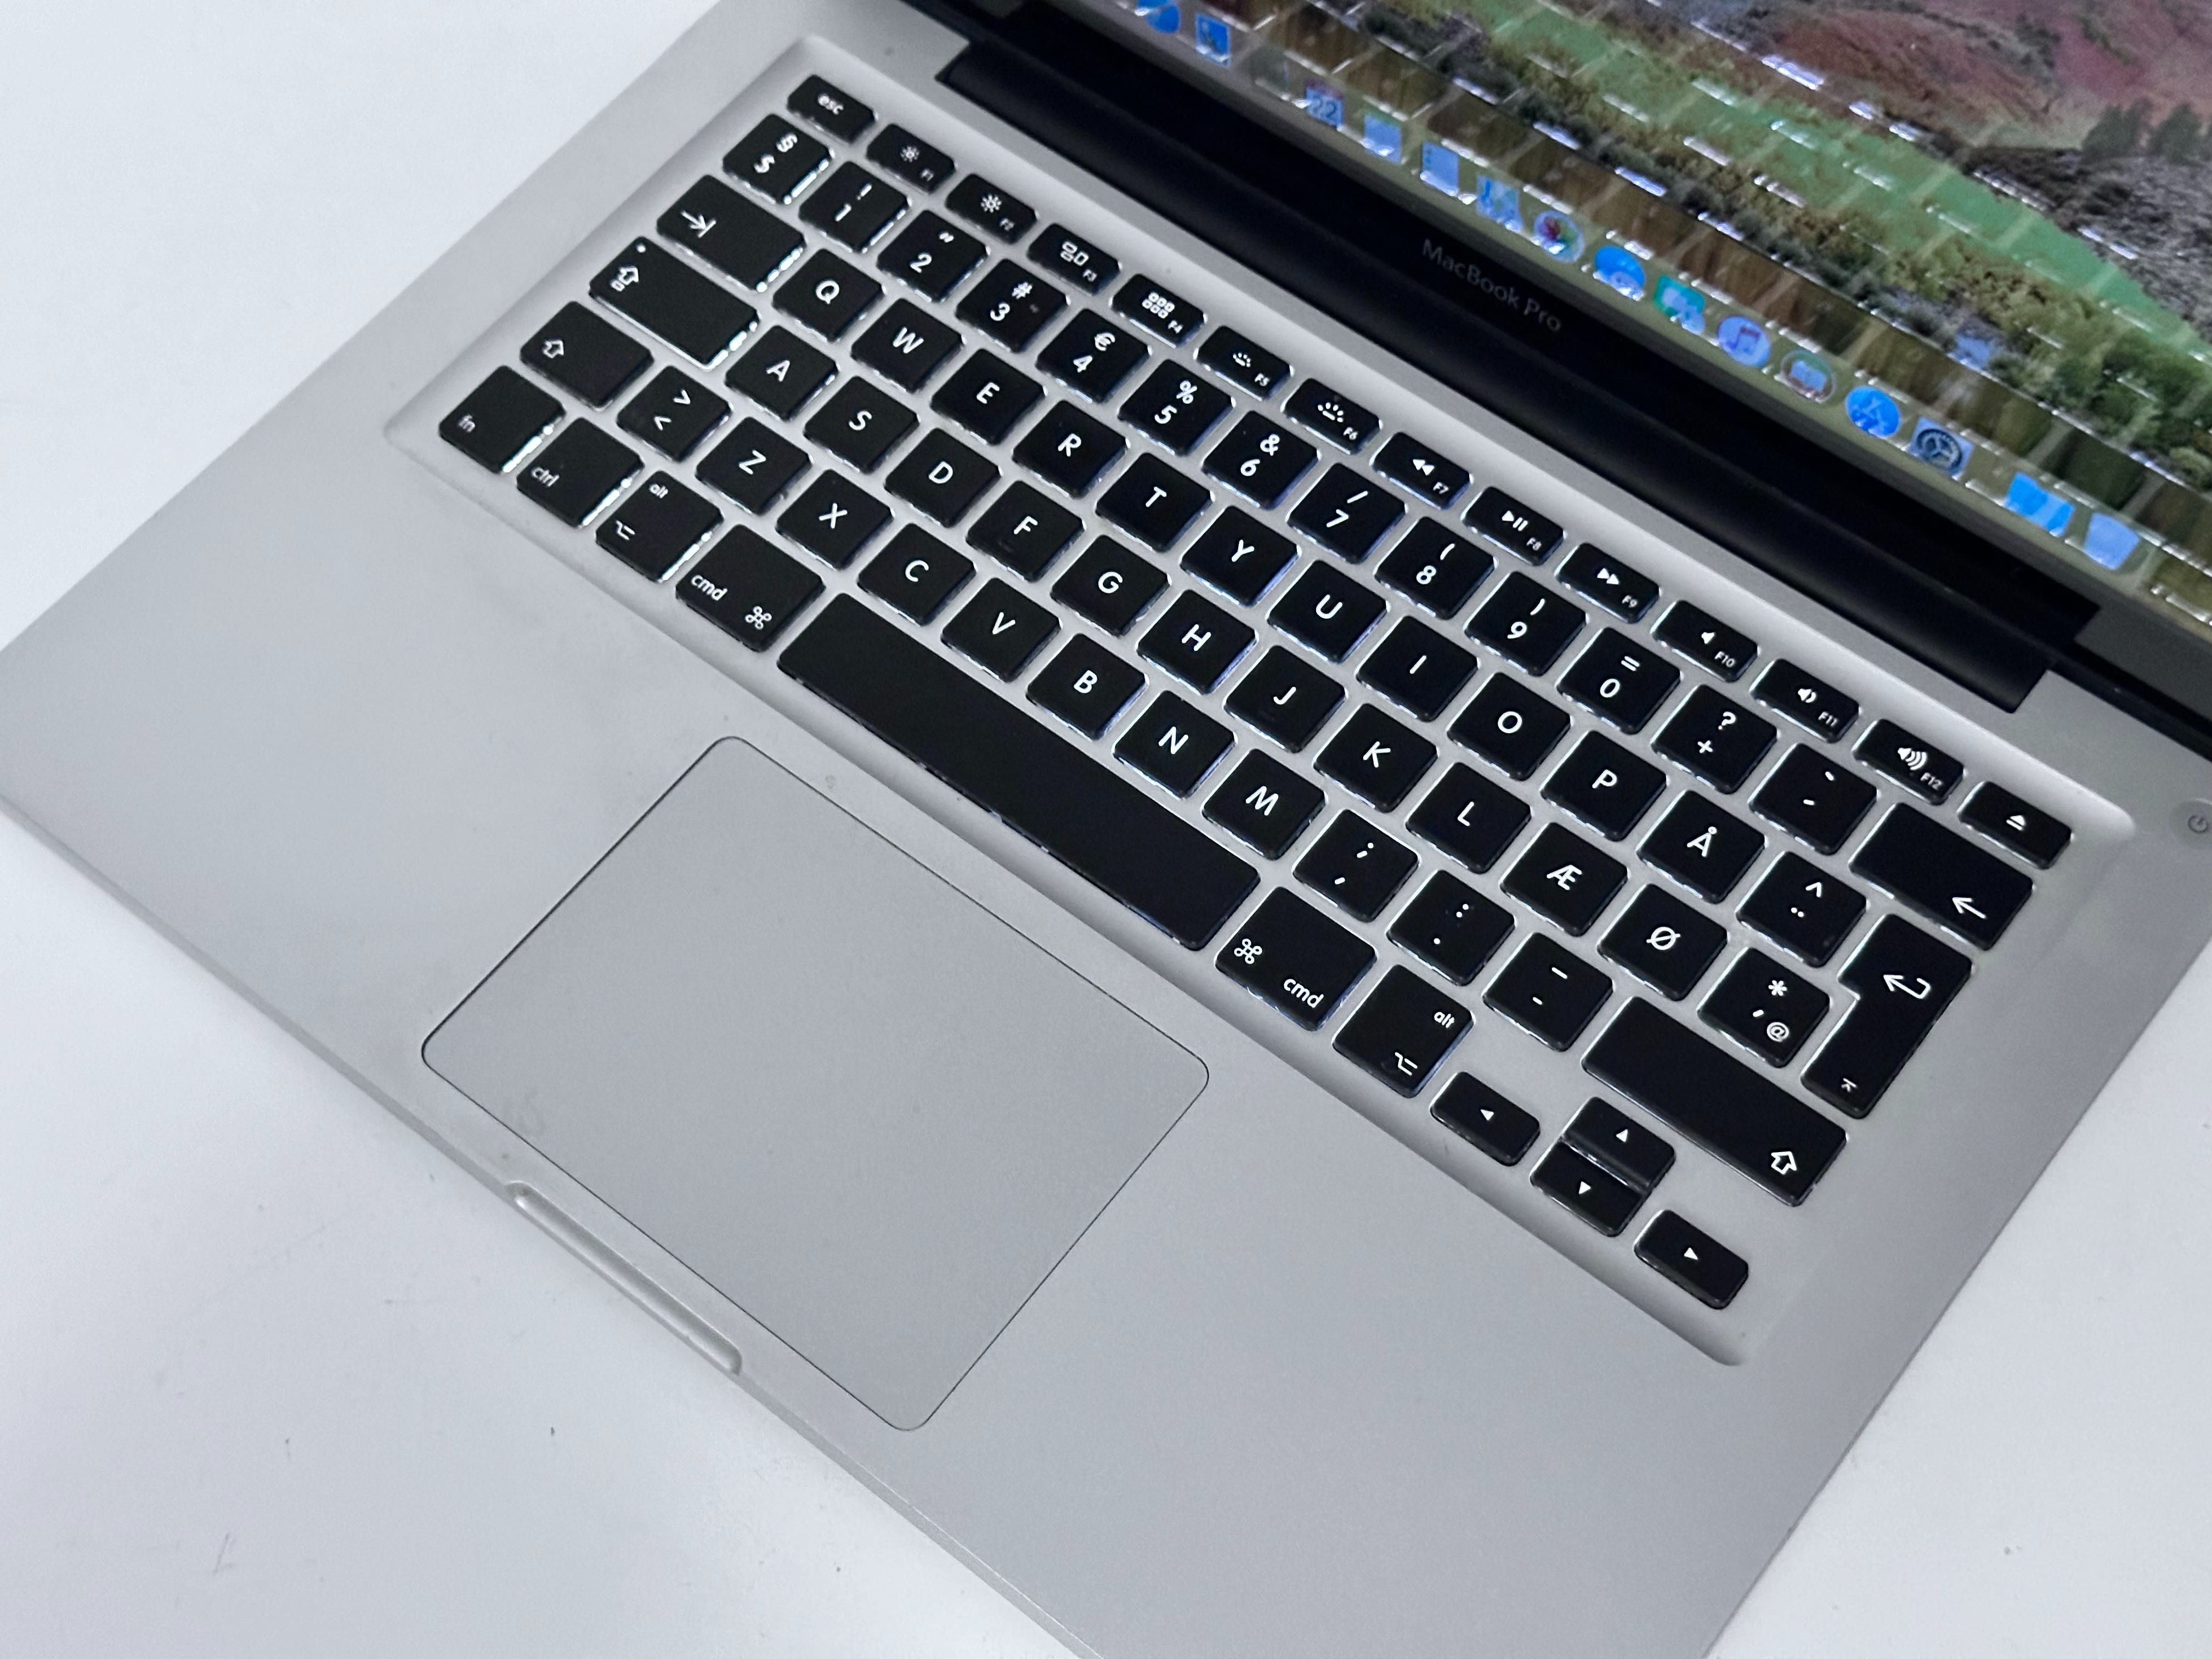 Apple MacBook Pro 13 Late 2011 i5 4GB RAM 500GB HDD Silver